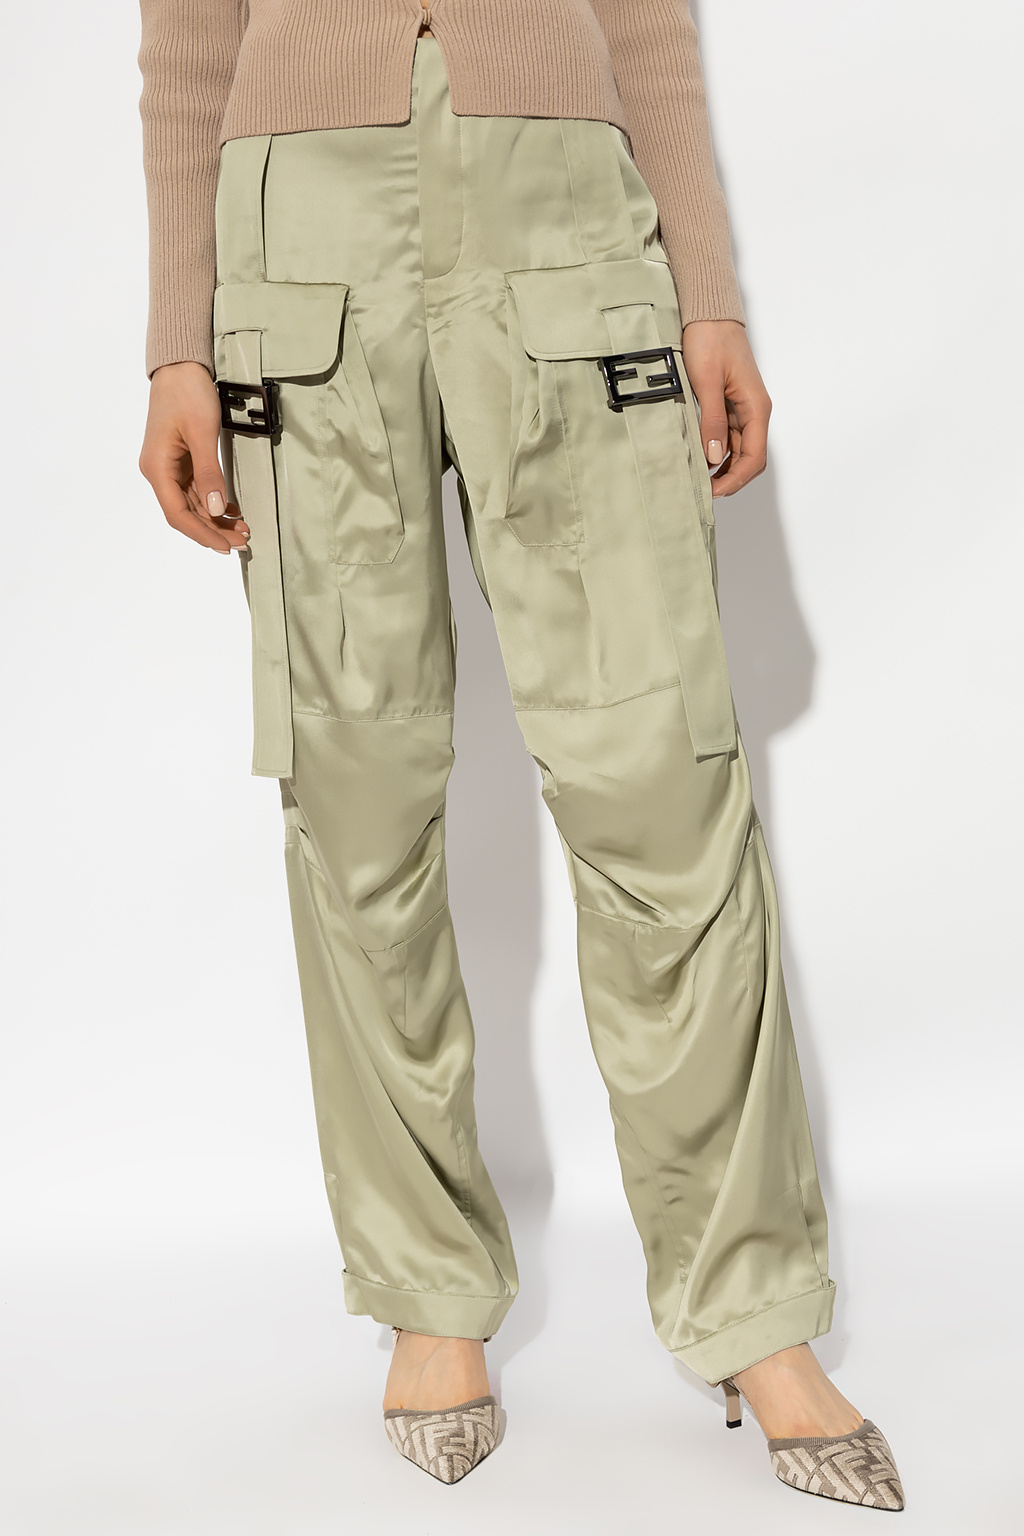 FENDI Sexy Army Vintage Women Embroidery Khaki Cargo Trousers Pants IT40  US7 